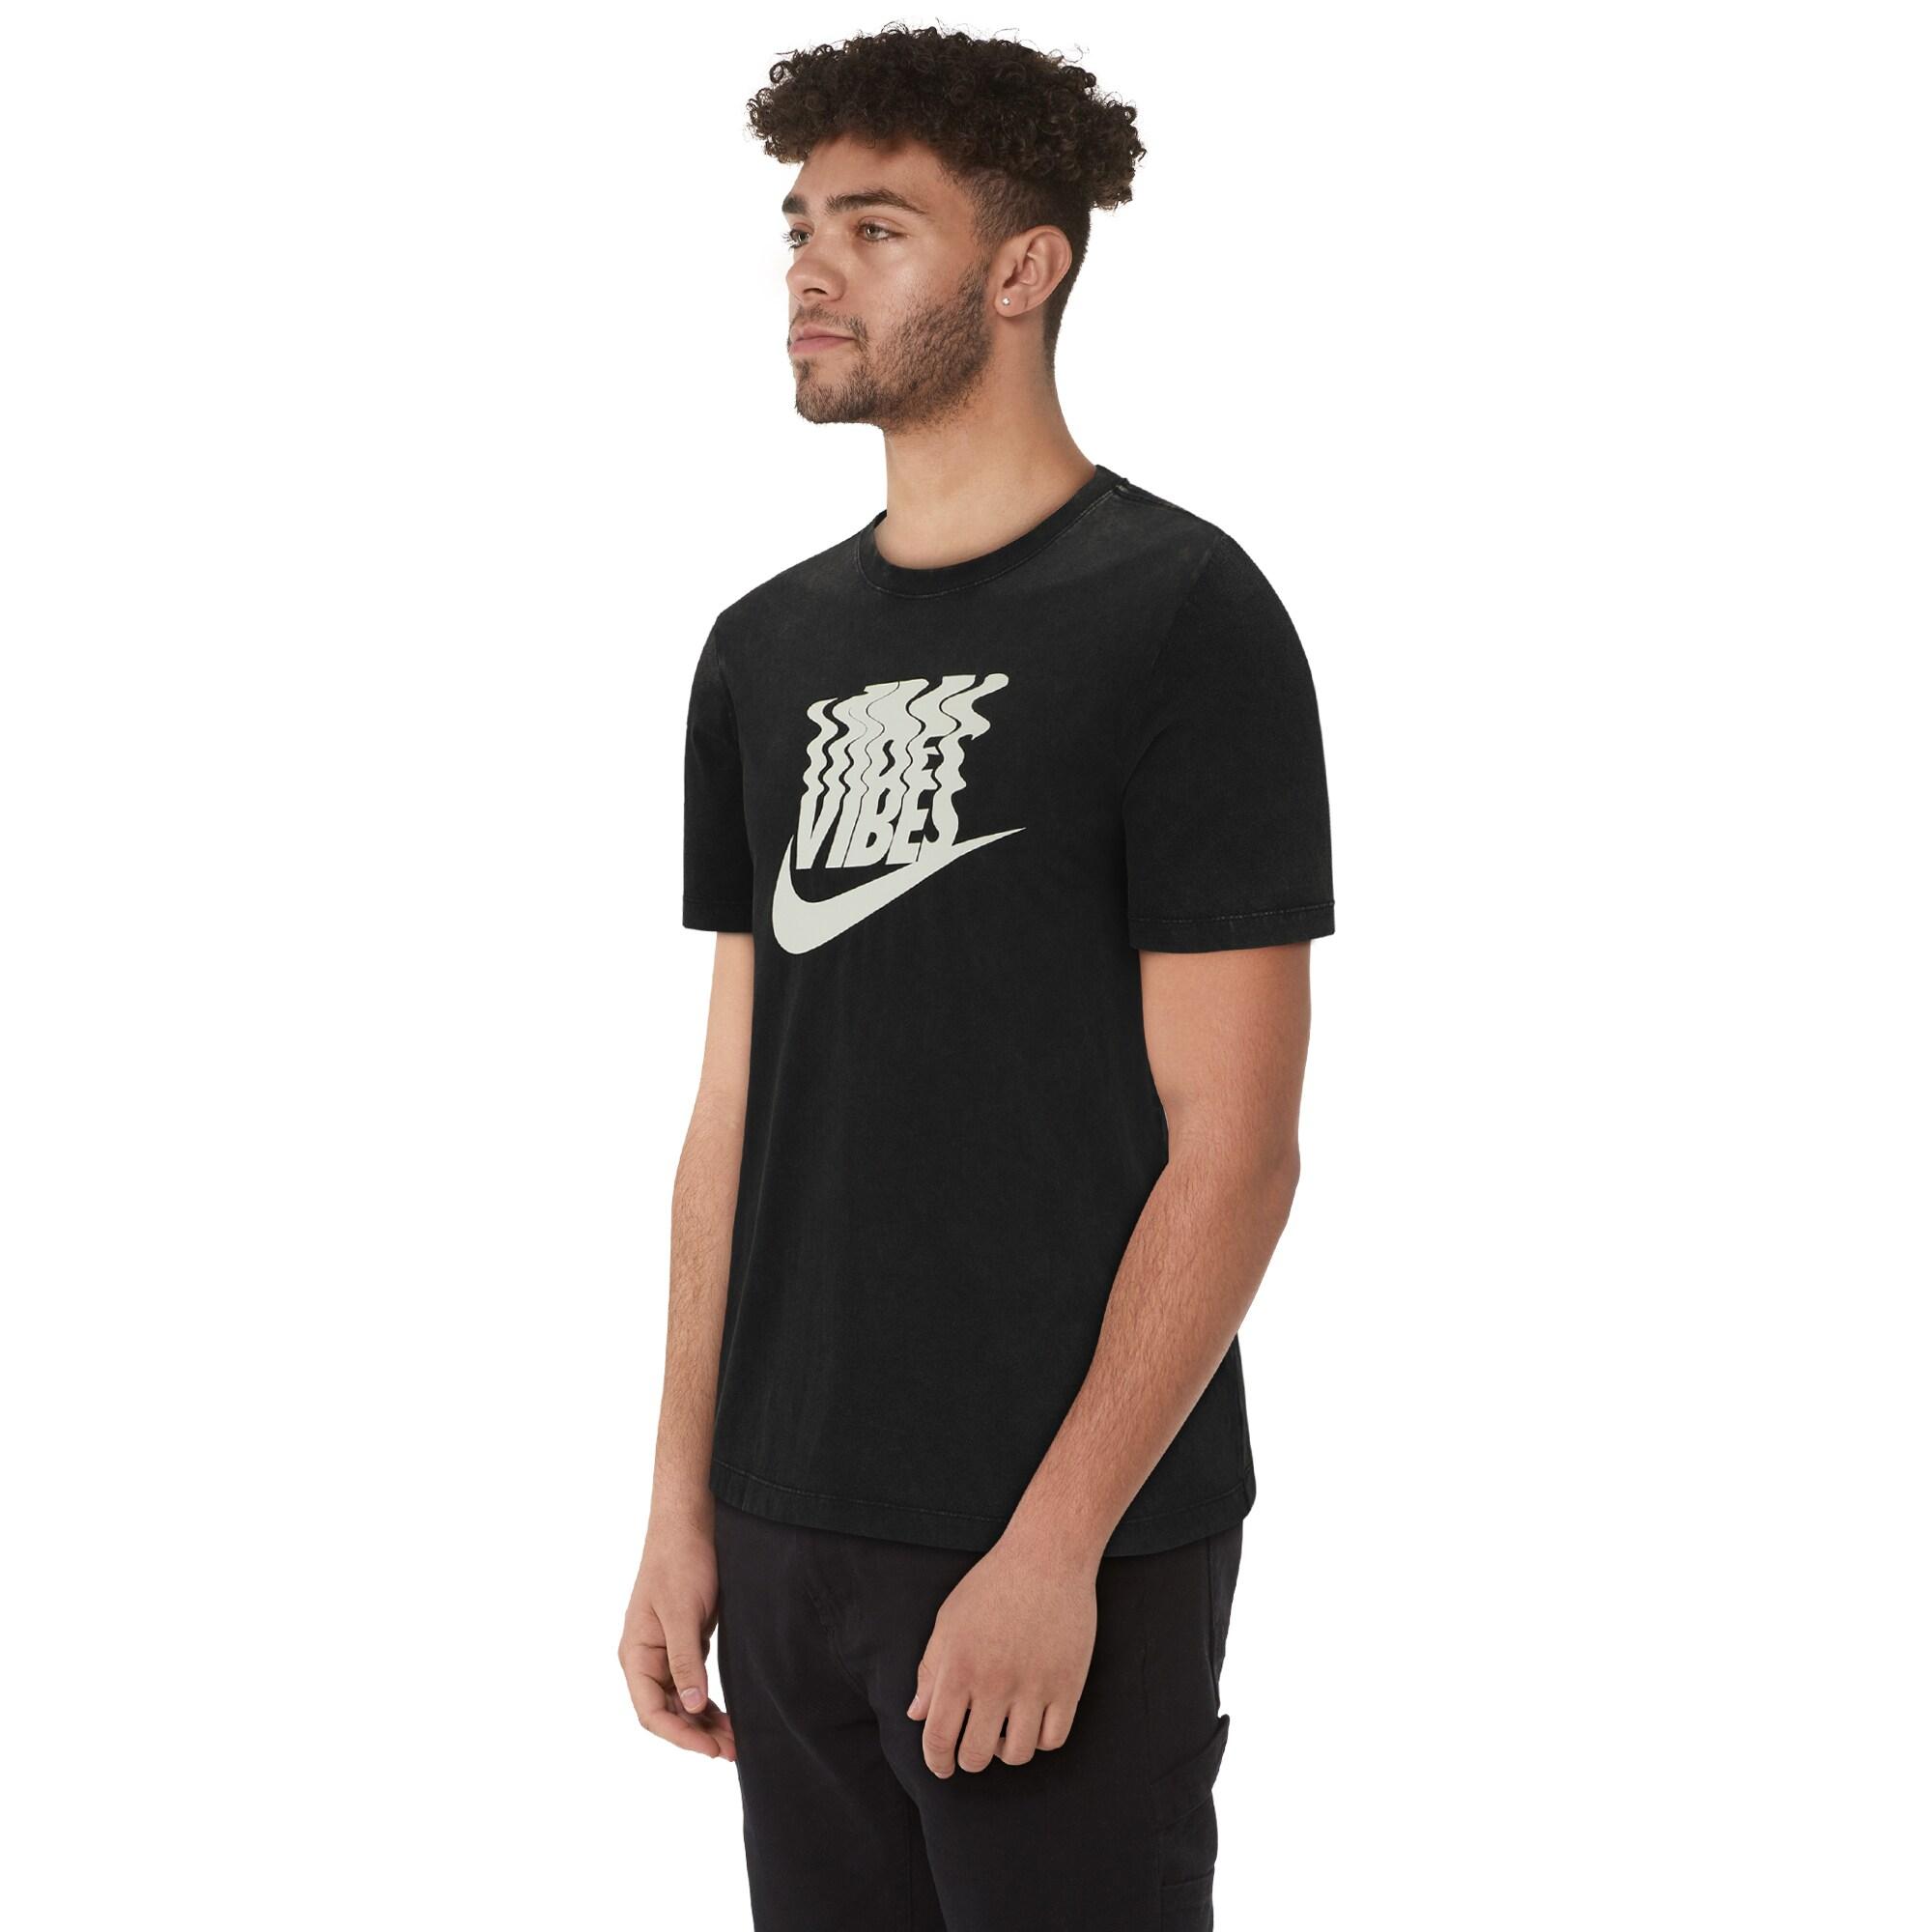 Nike Vibes Swoosh T-shirt in Black for Men - Lyst